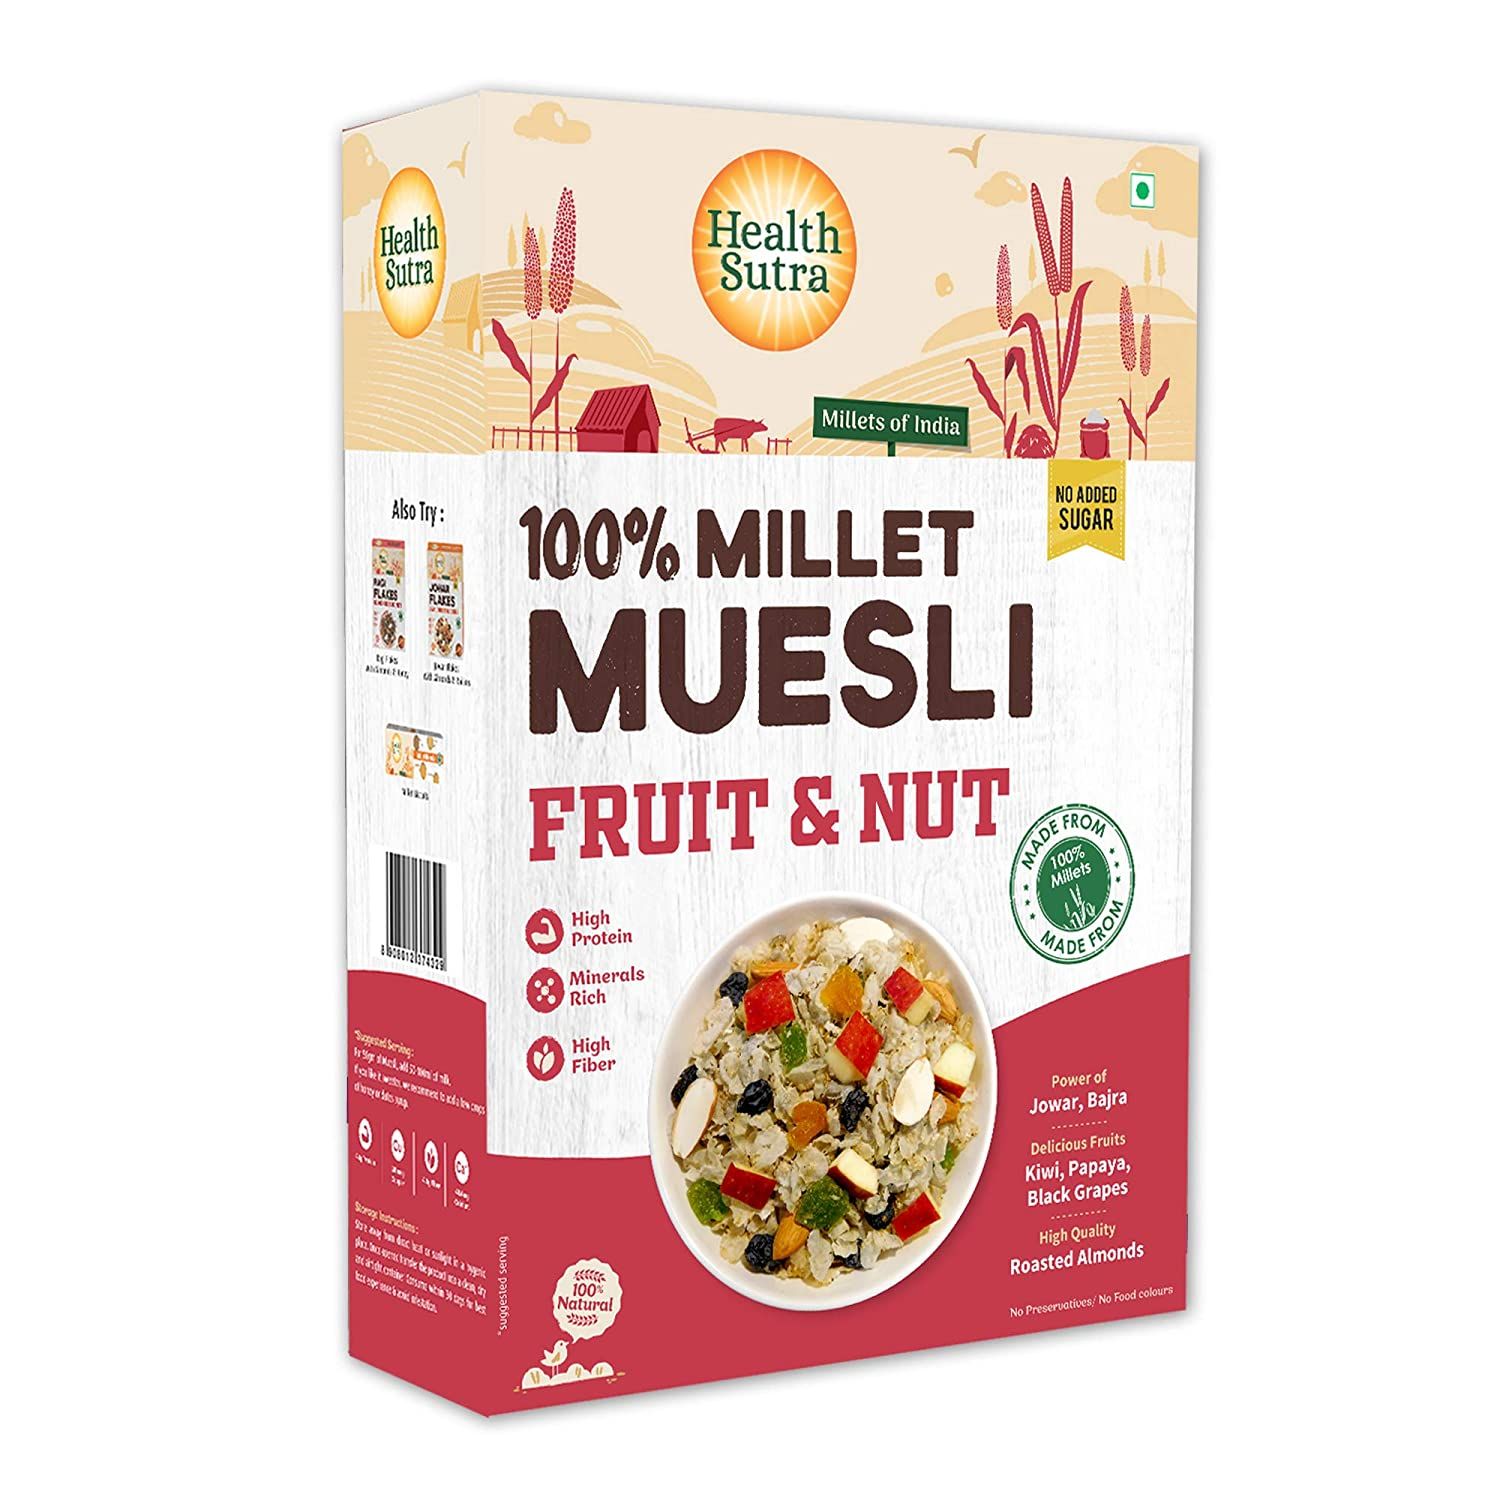 Health Sutra Millet Muesli Fruit & Nut Image